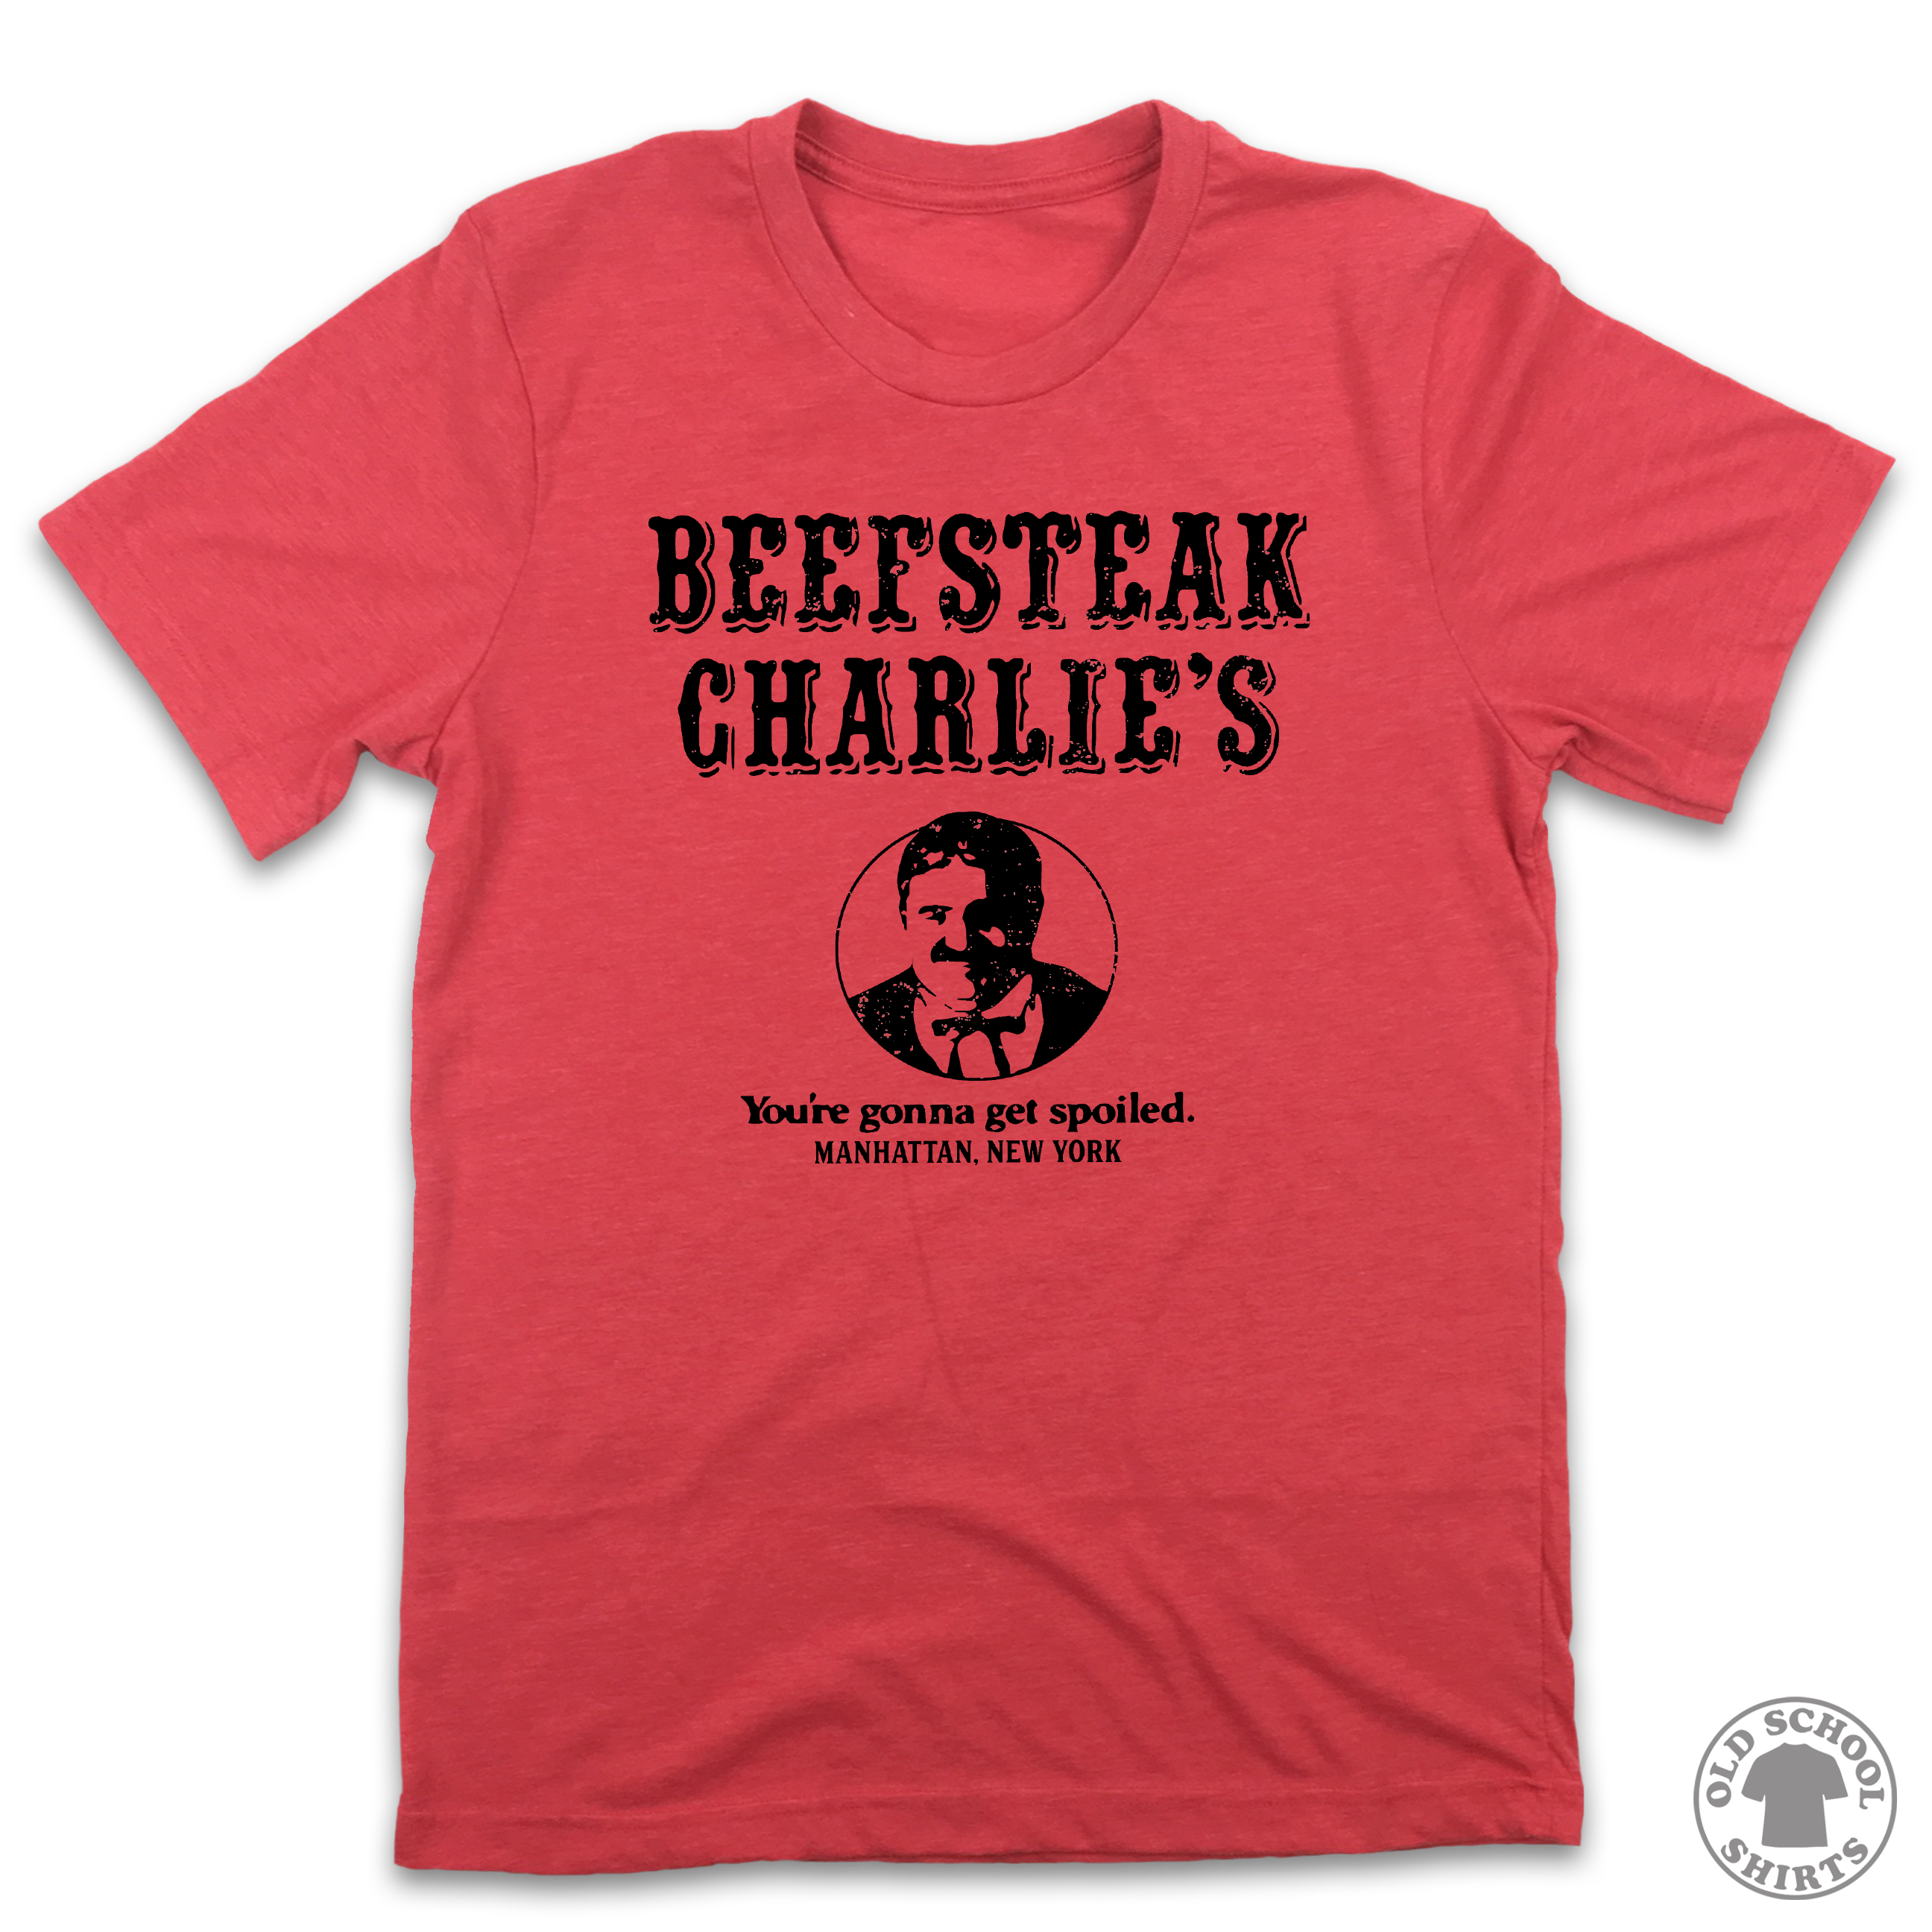 Beefsteak Charlie's - Old School Shirts- Retro Sports T Shirts